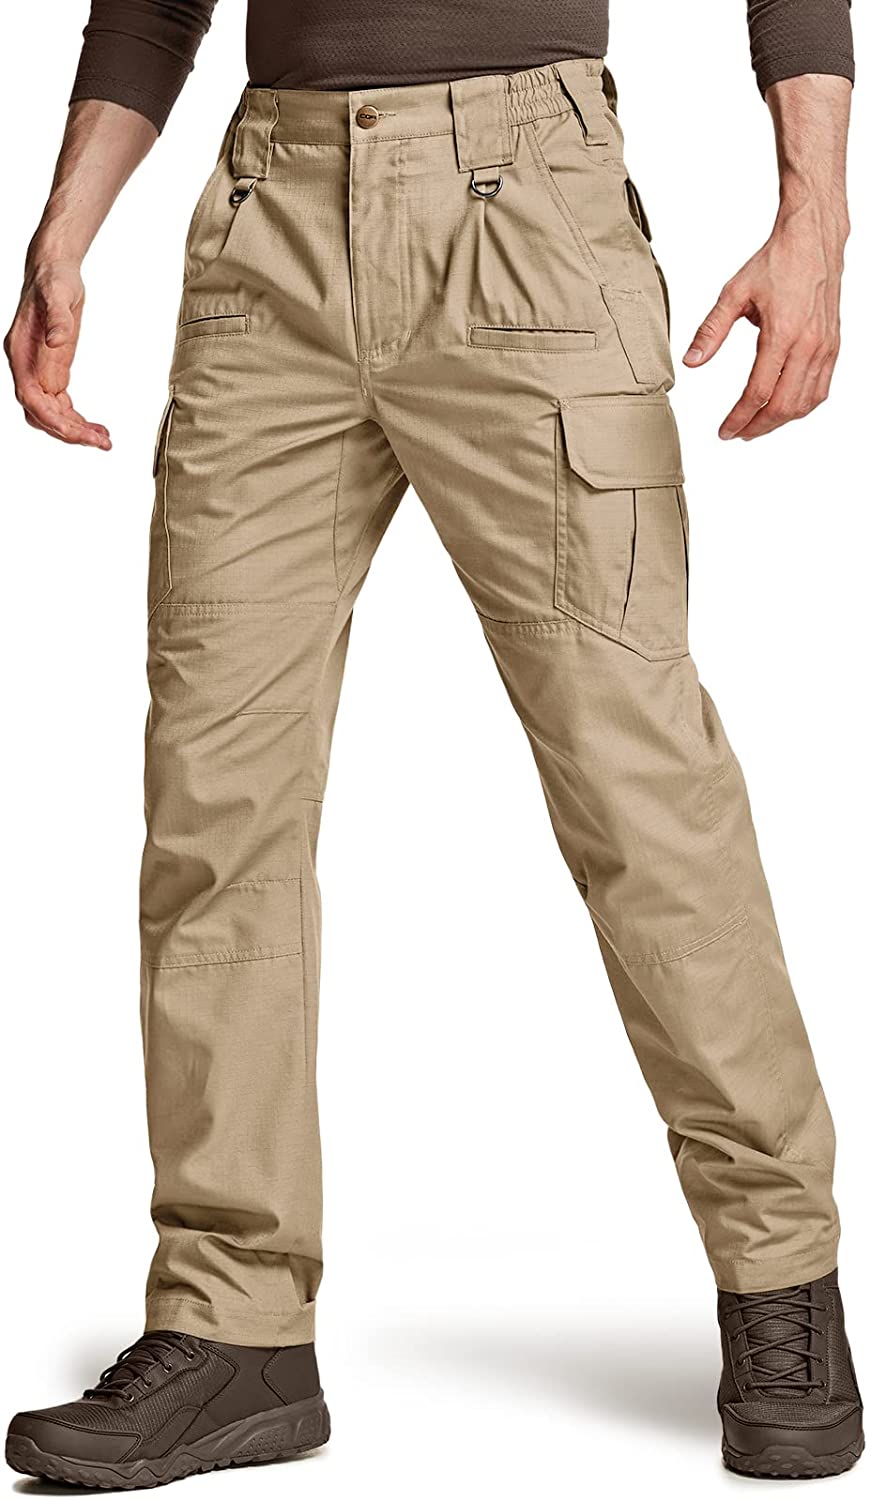 Water Repellent Ripstop Cargo Pants Lightweight EDC Outdoor Hiking Work Pants CQR Men's Flex Stretch Tactical Pants 